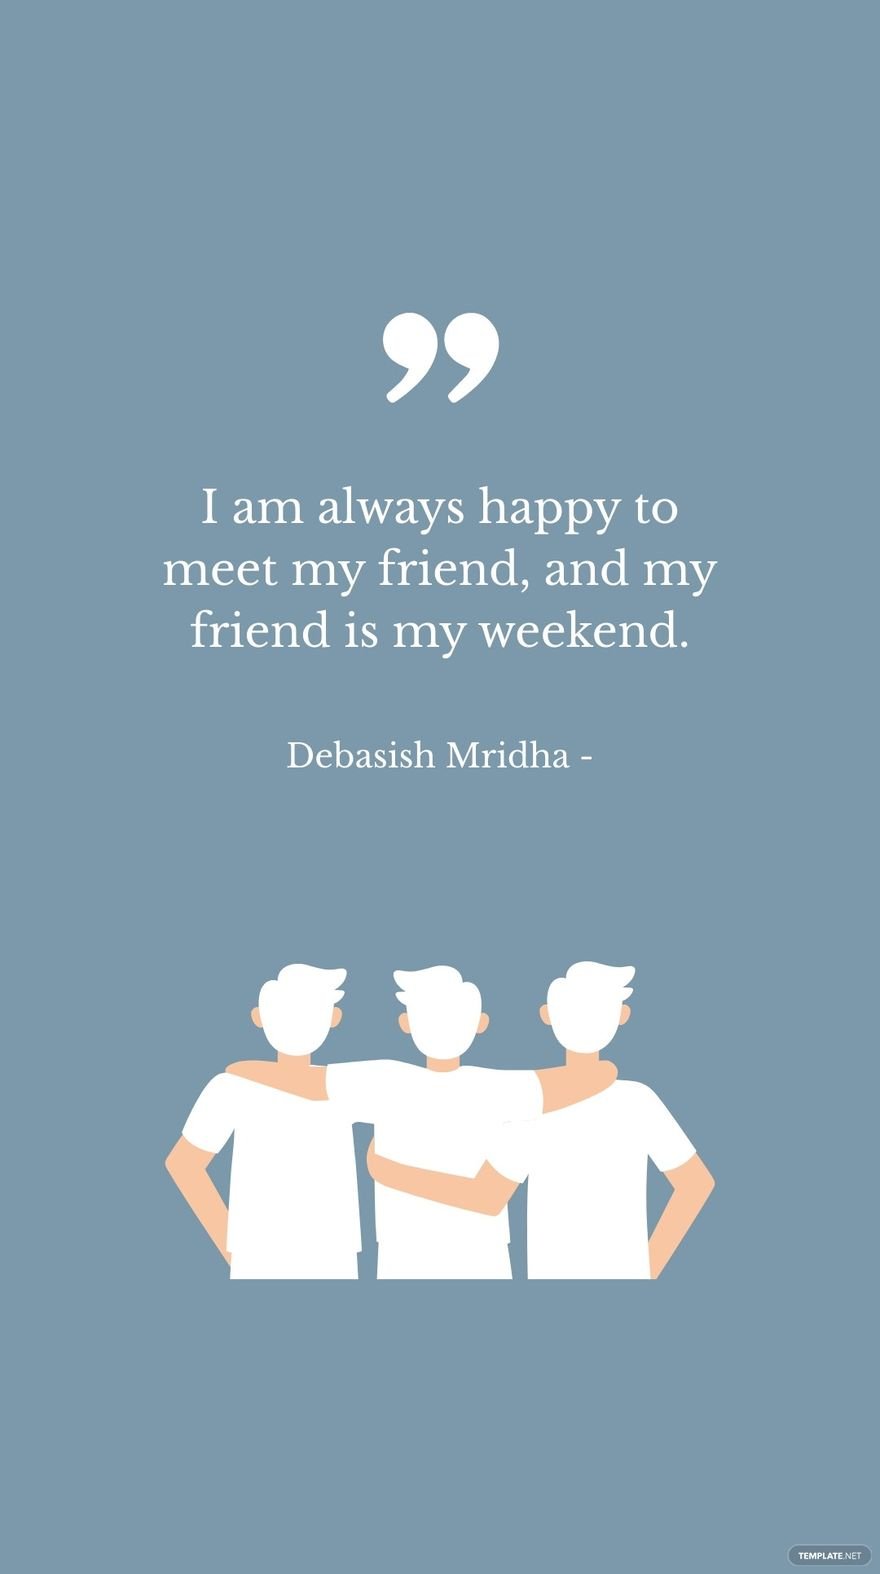 Debasish Mridha - I am always happy to meet my friend, and my friend is my weekend. in JPG